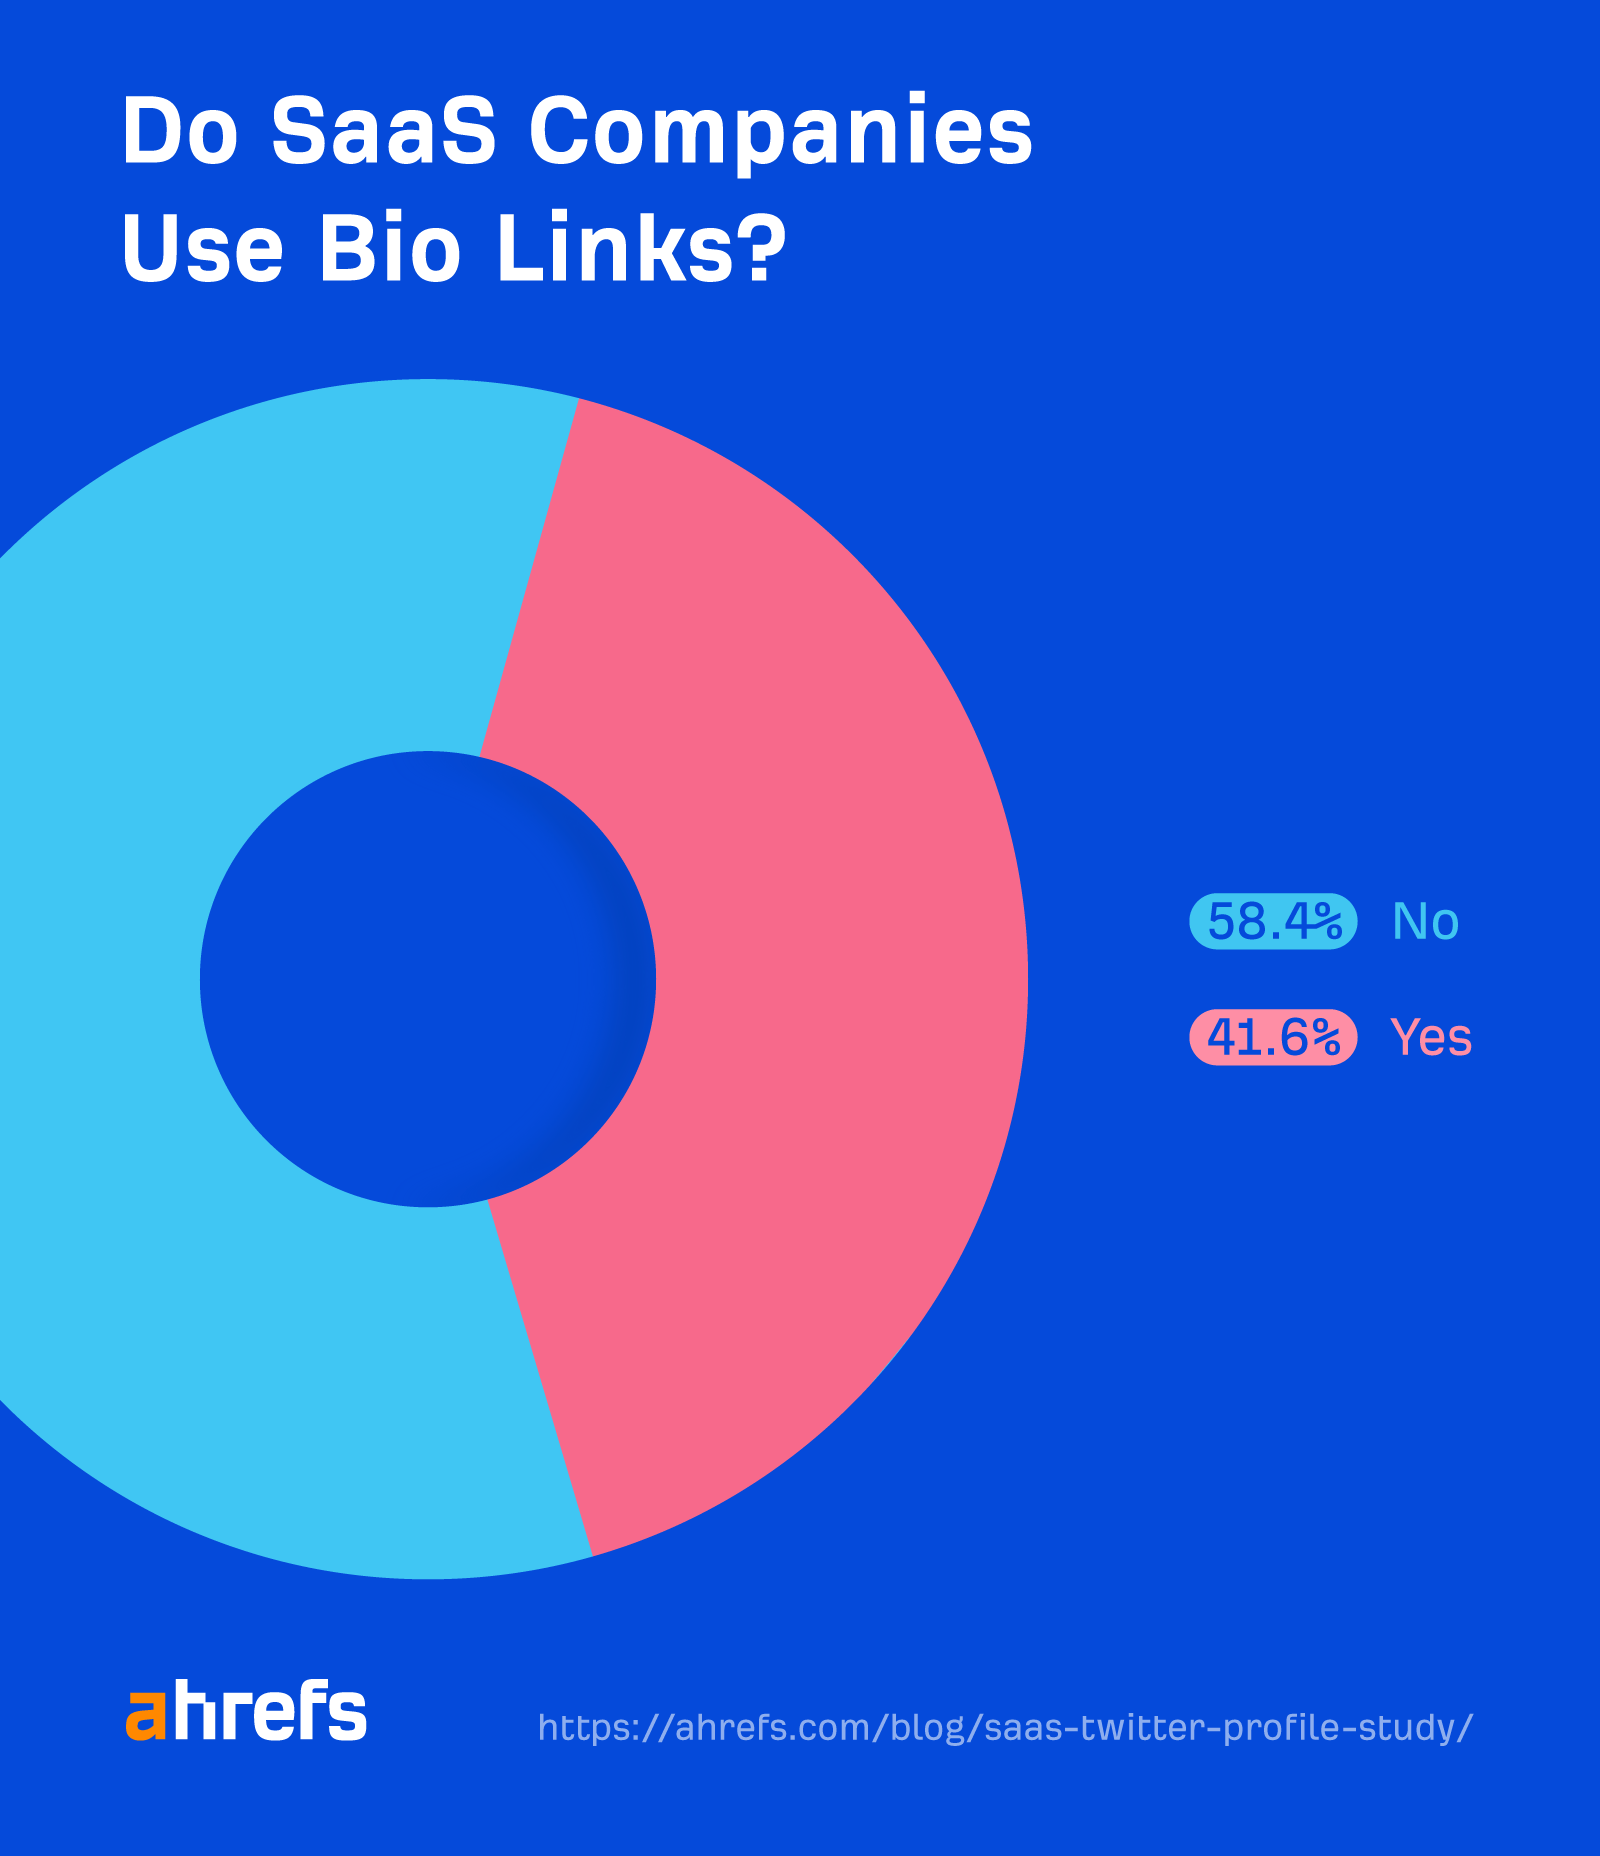 41.6% of SaaS companies use bio links
